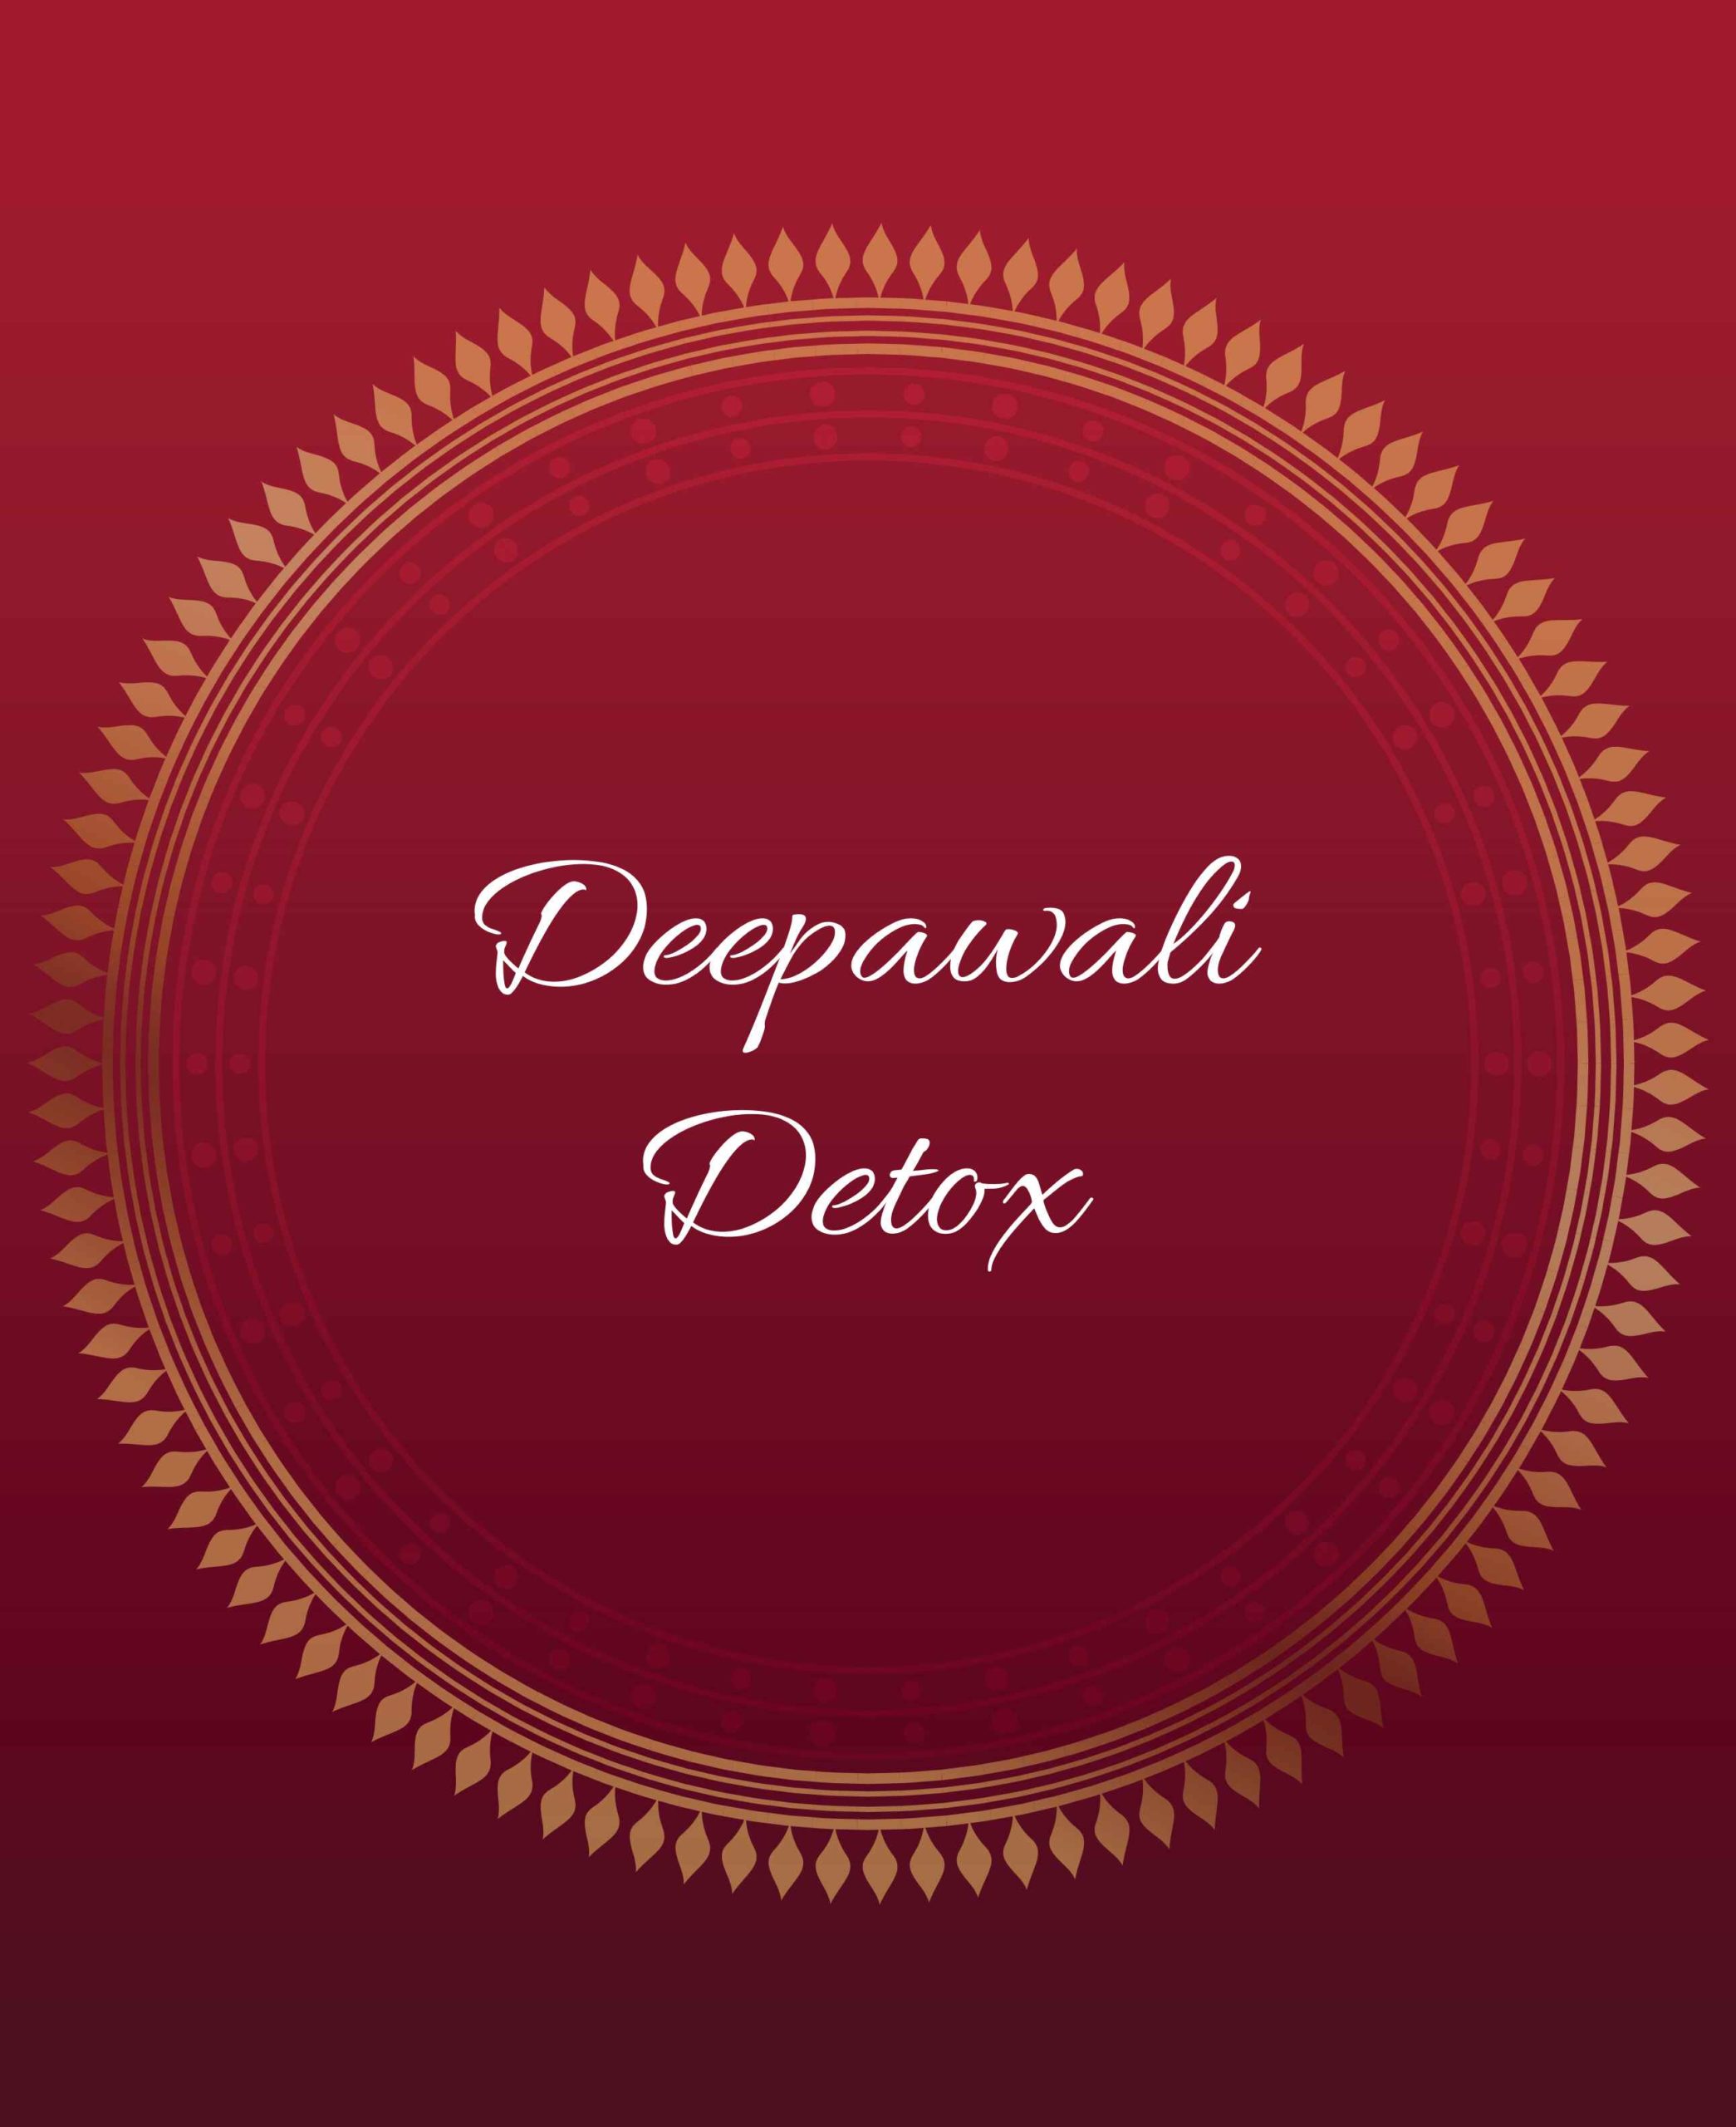 Deepawali Detox 